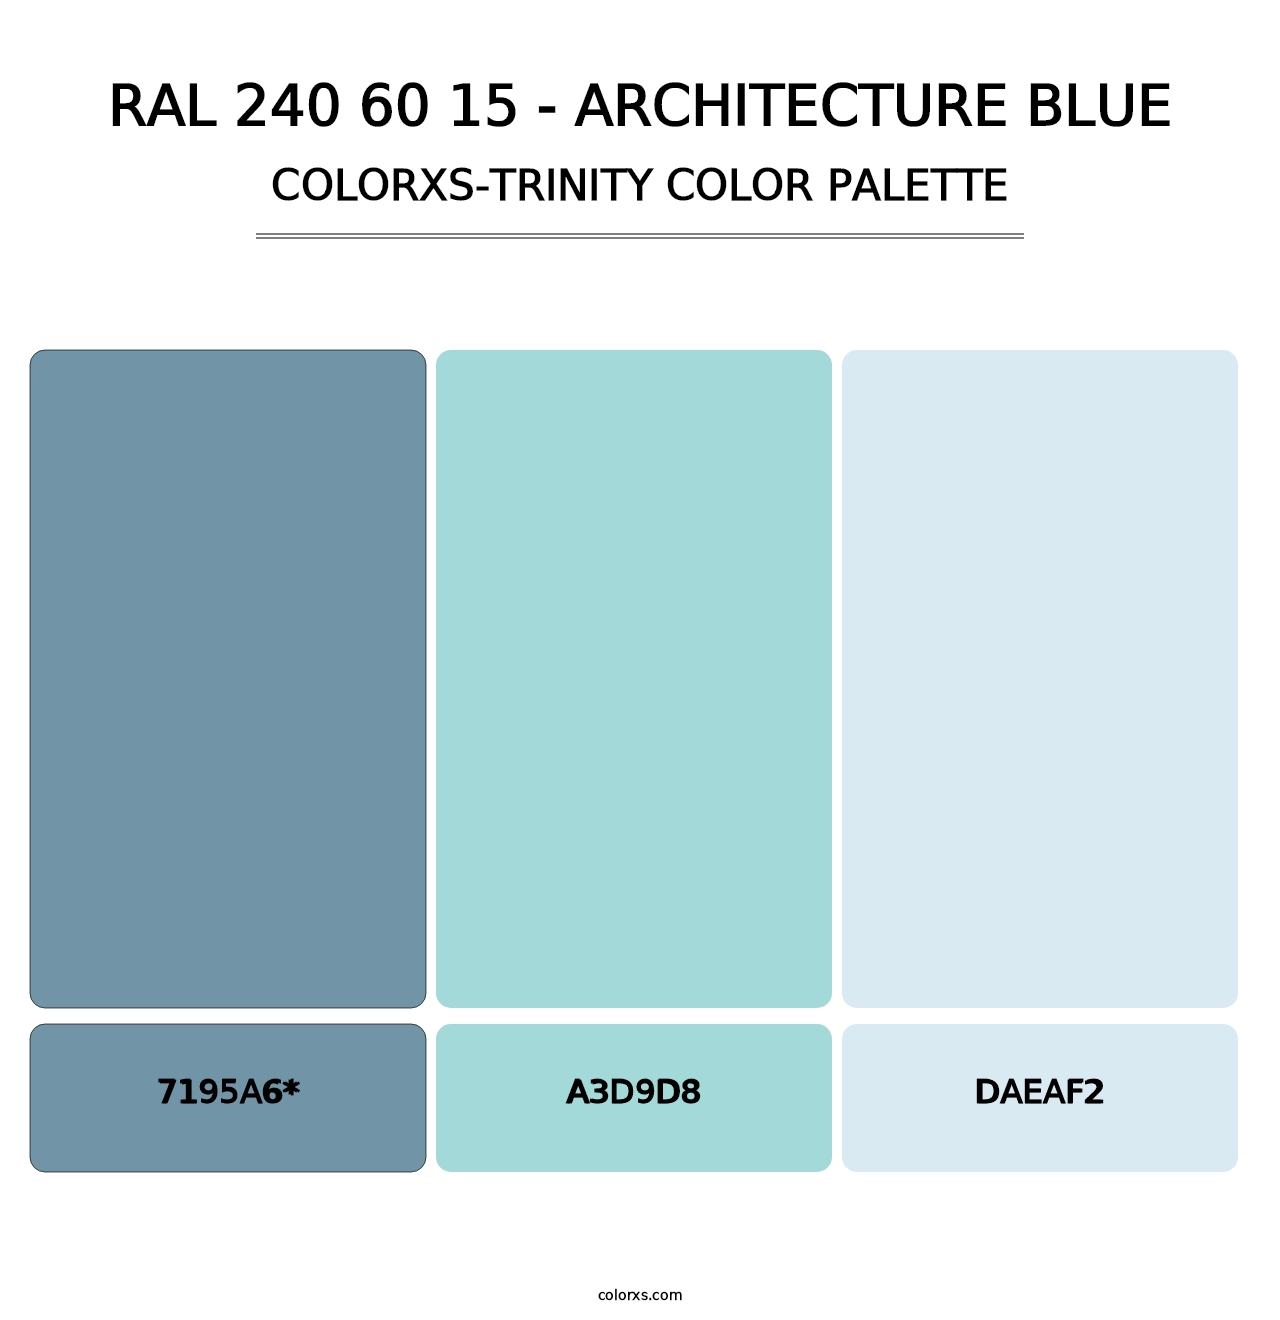 RAL 240 60 15 - Architecture Blue - Colorxs Trinity Palette